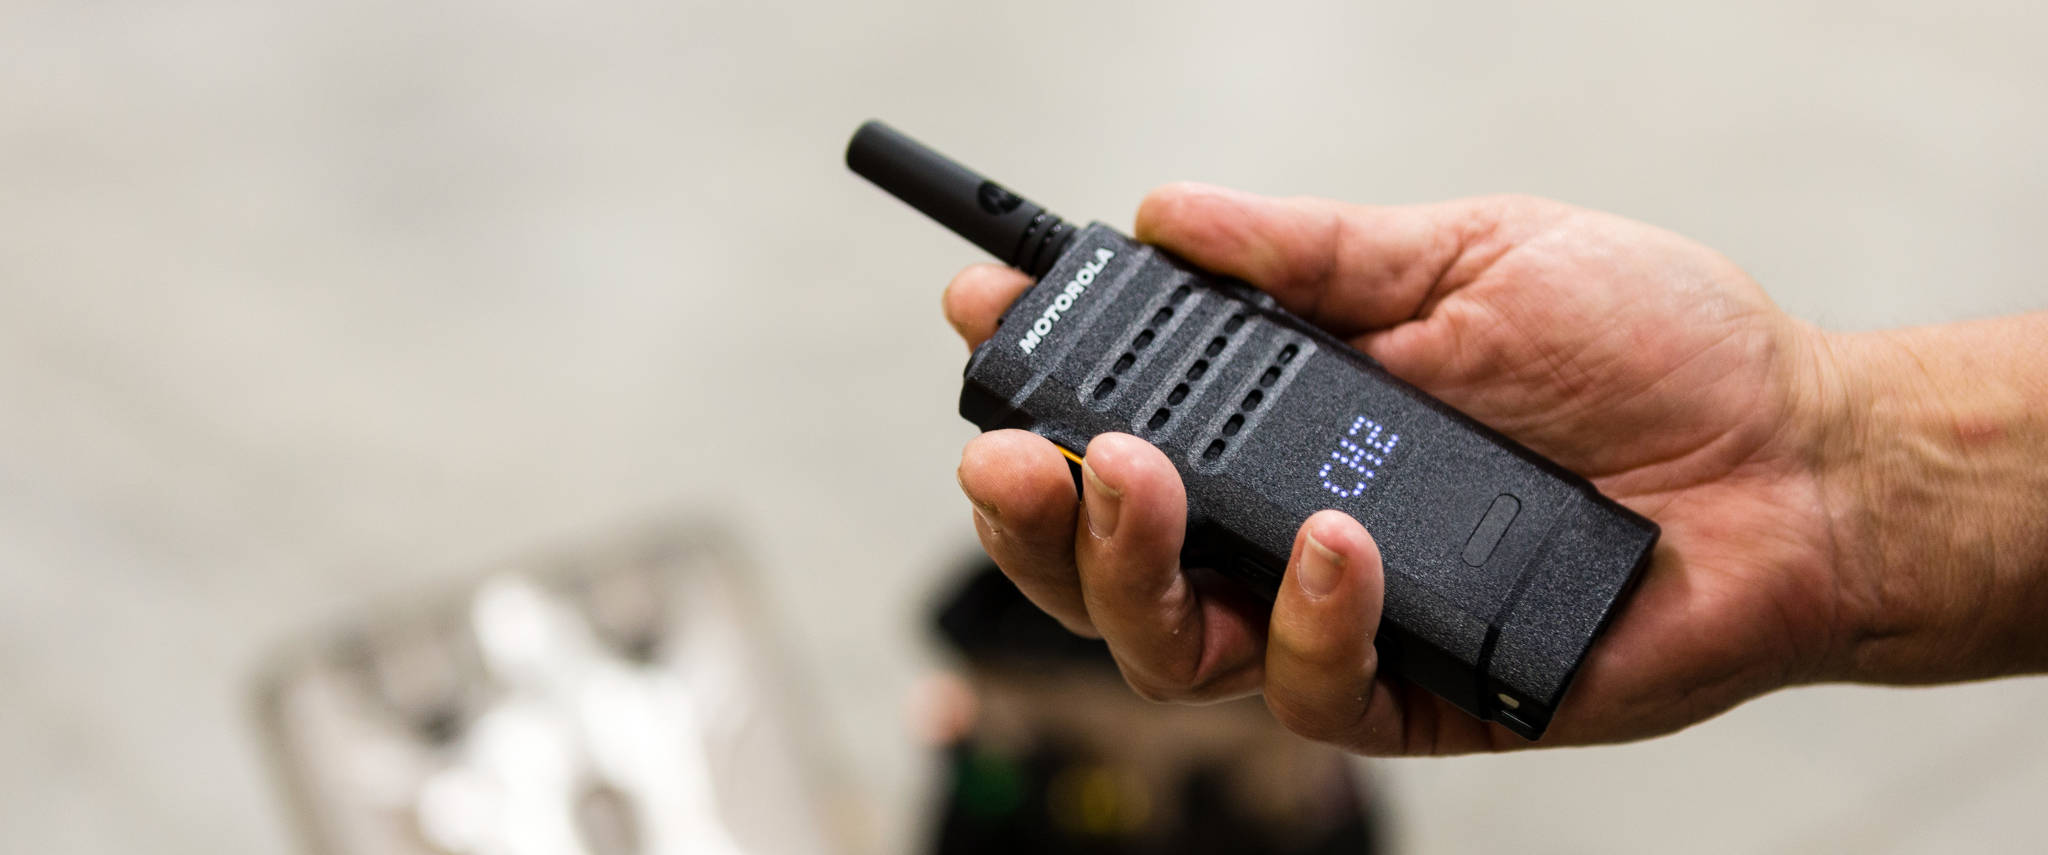 Motorola SL1600 Portable DMR Radio